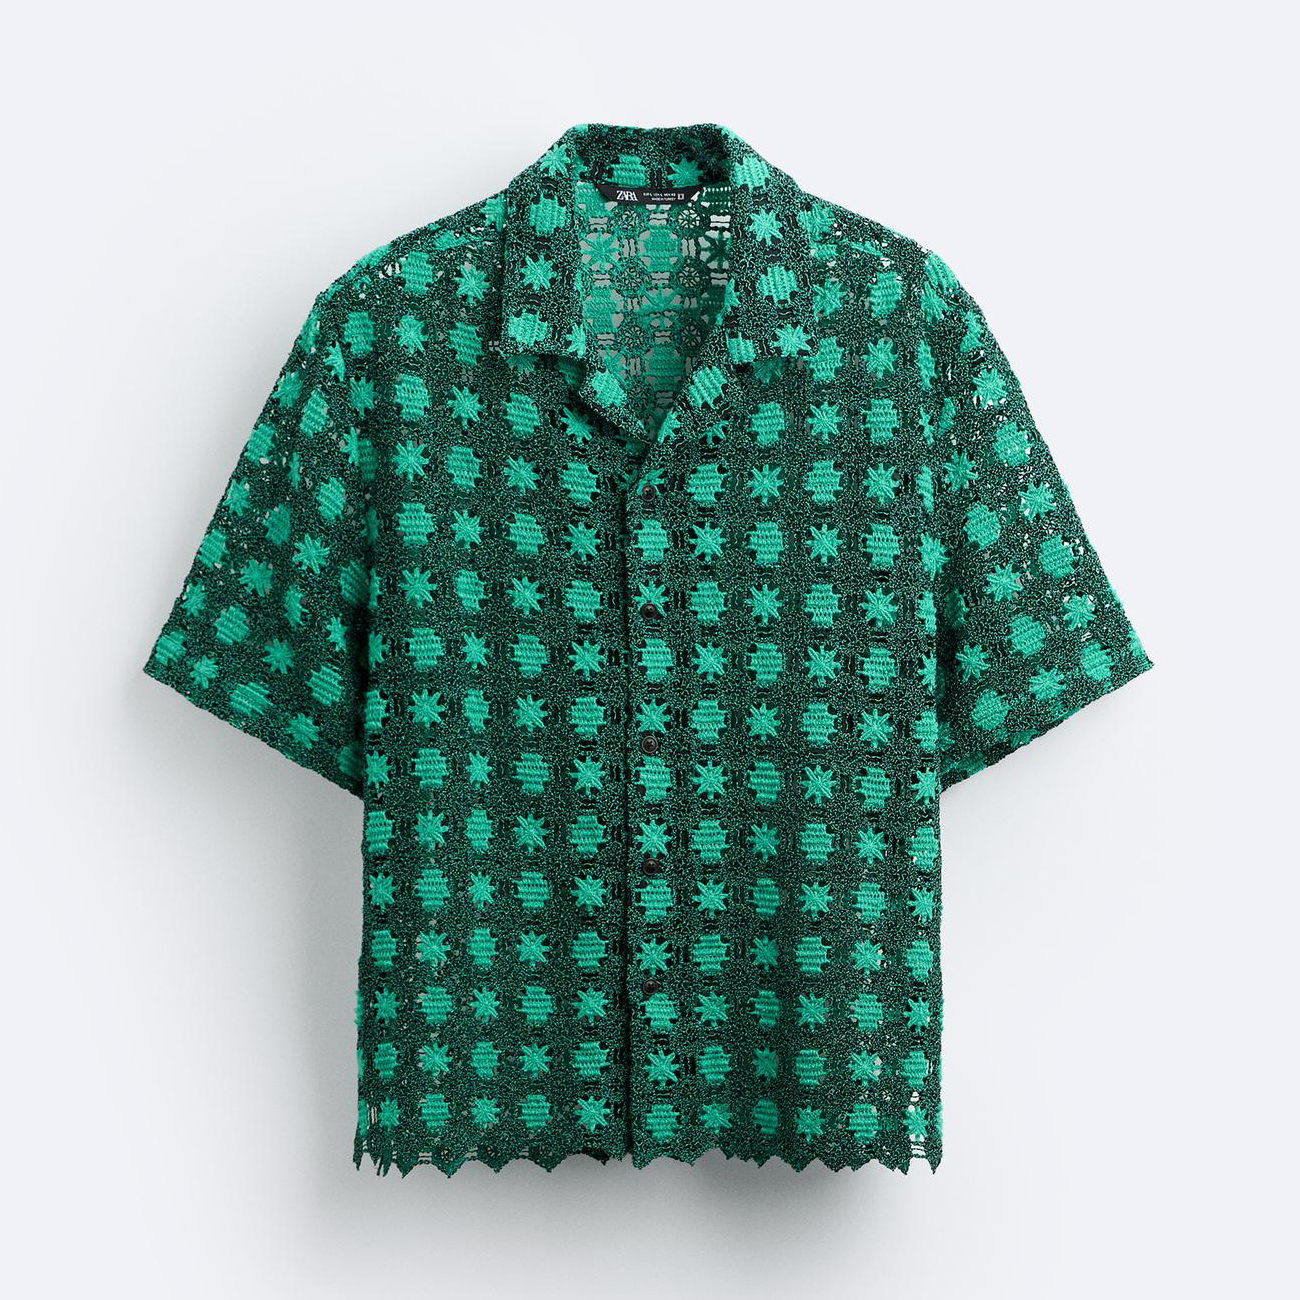 свитер zara textured зеленый Рубашка Zara Textured Crochet, зеленый